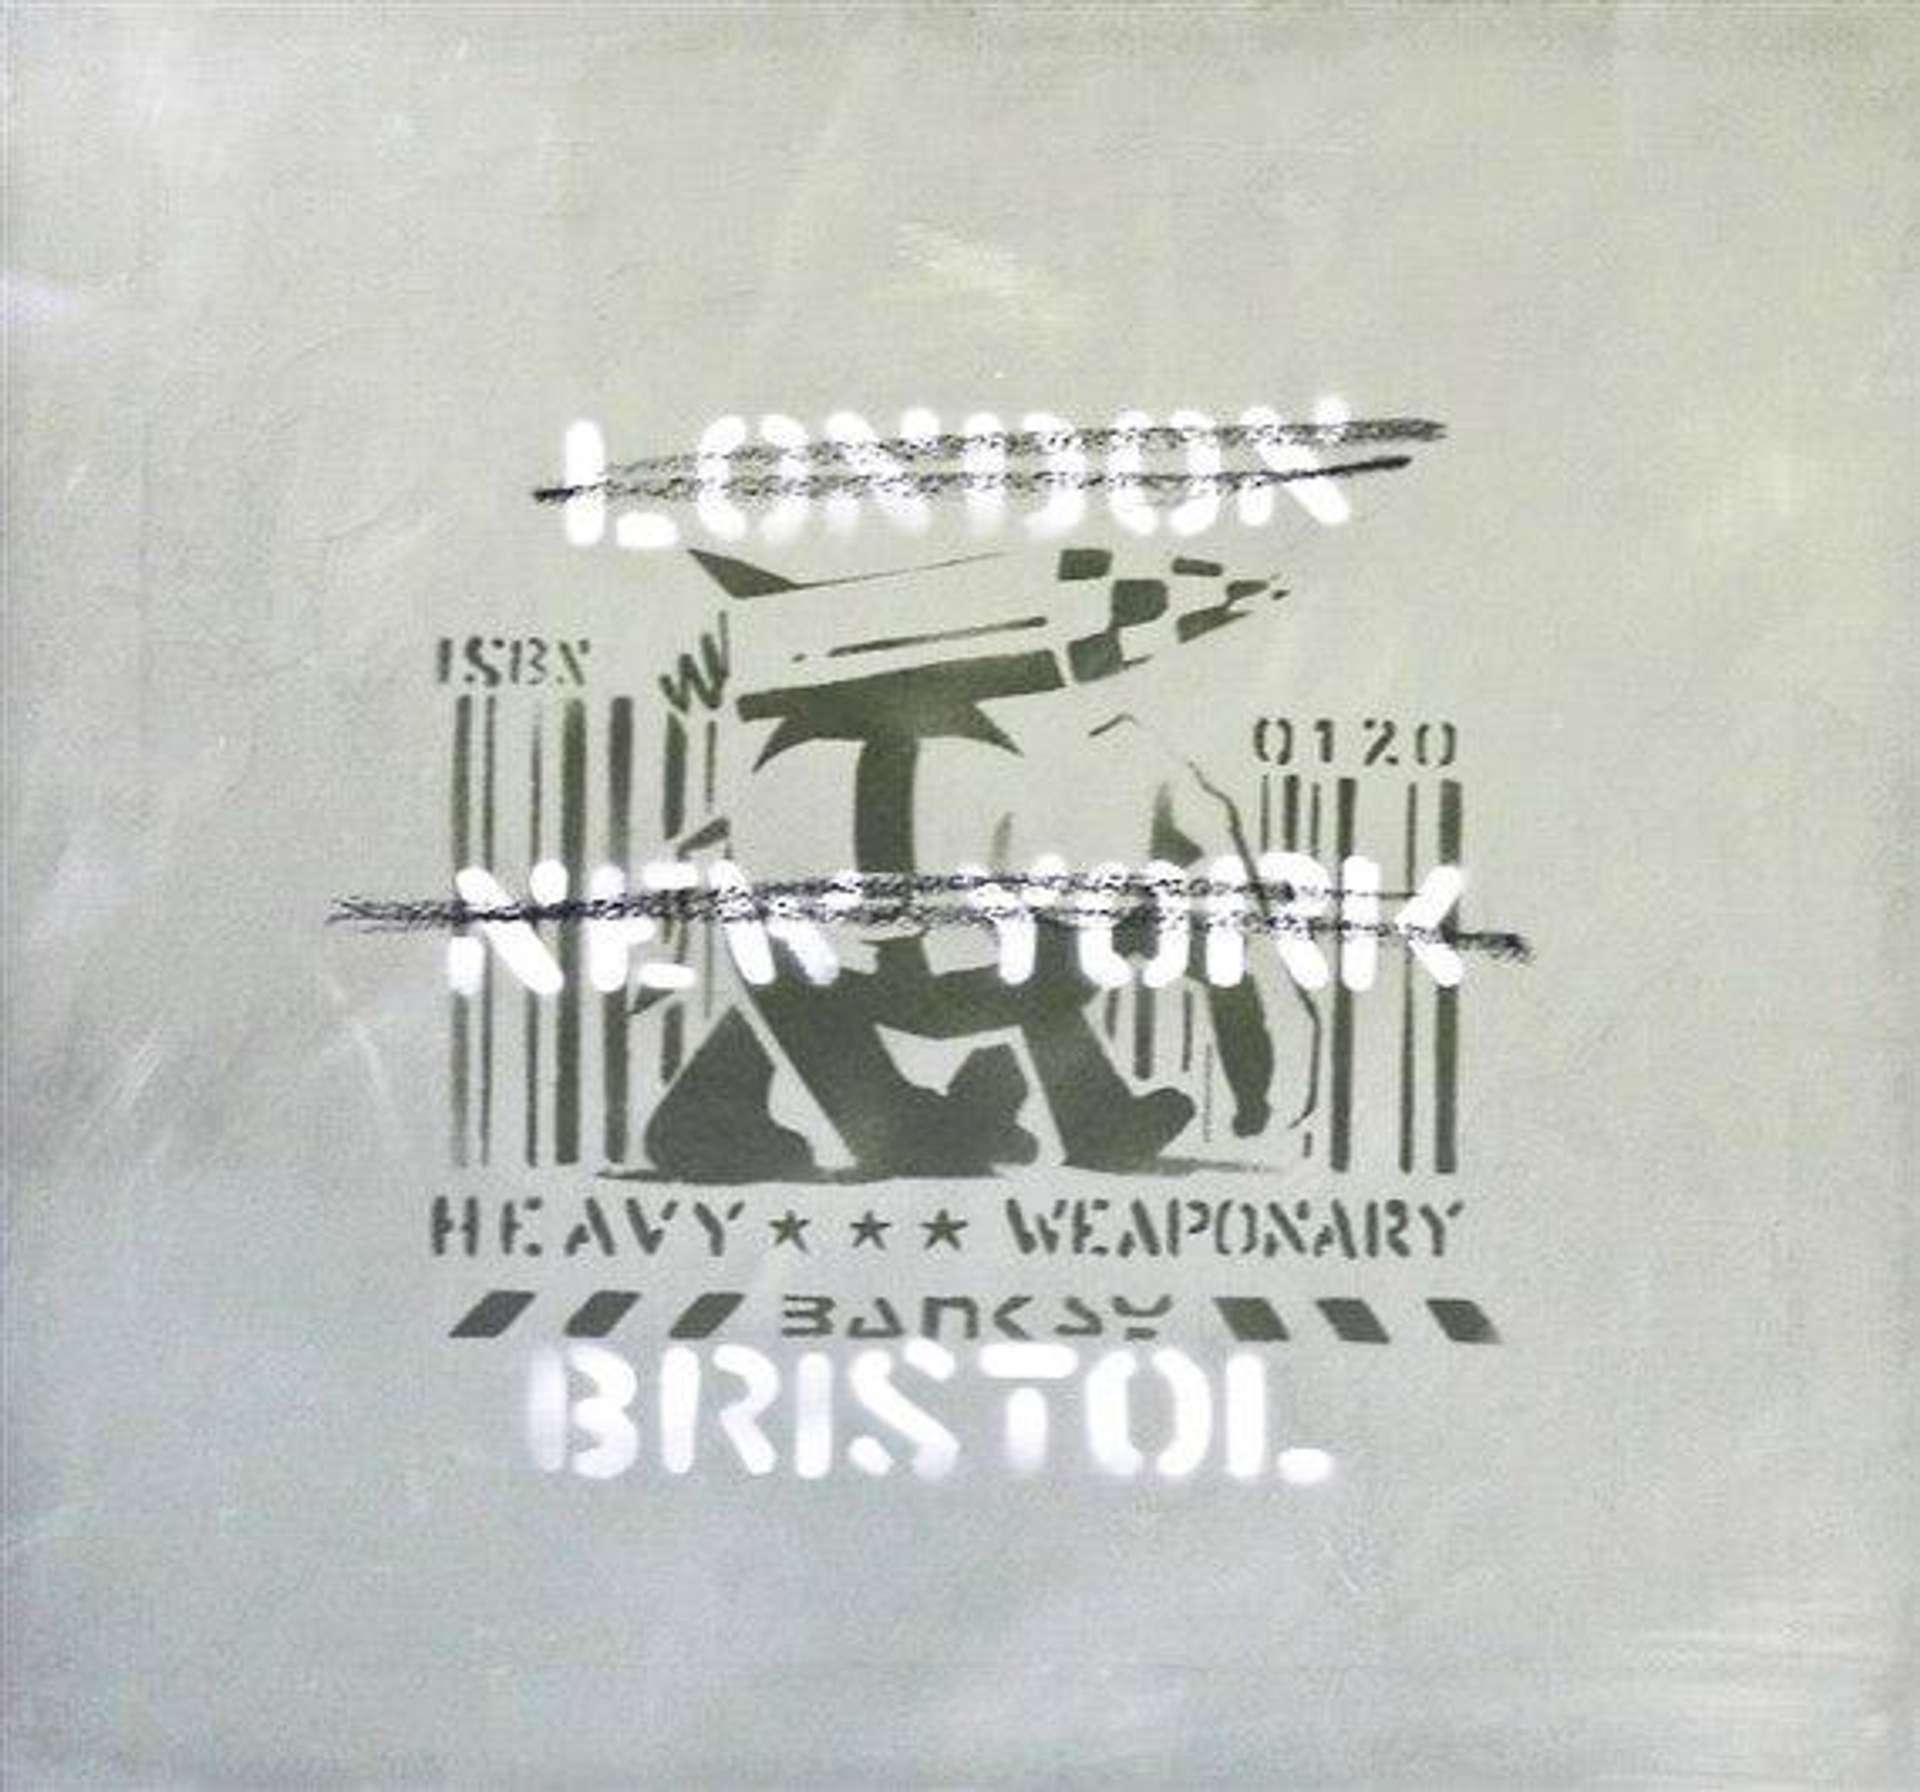 London, New York, Bristol (Heavy Weaponry) - Mixed Media by Banksy 2000 - MyArtBroker